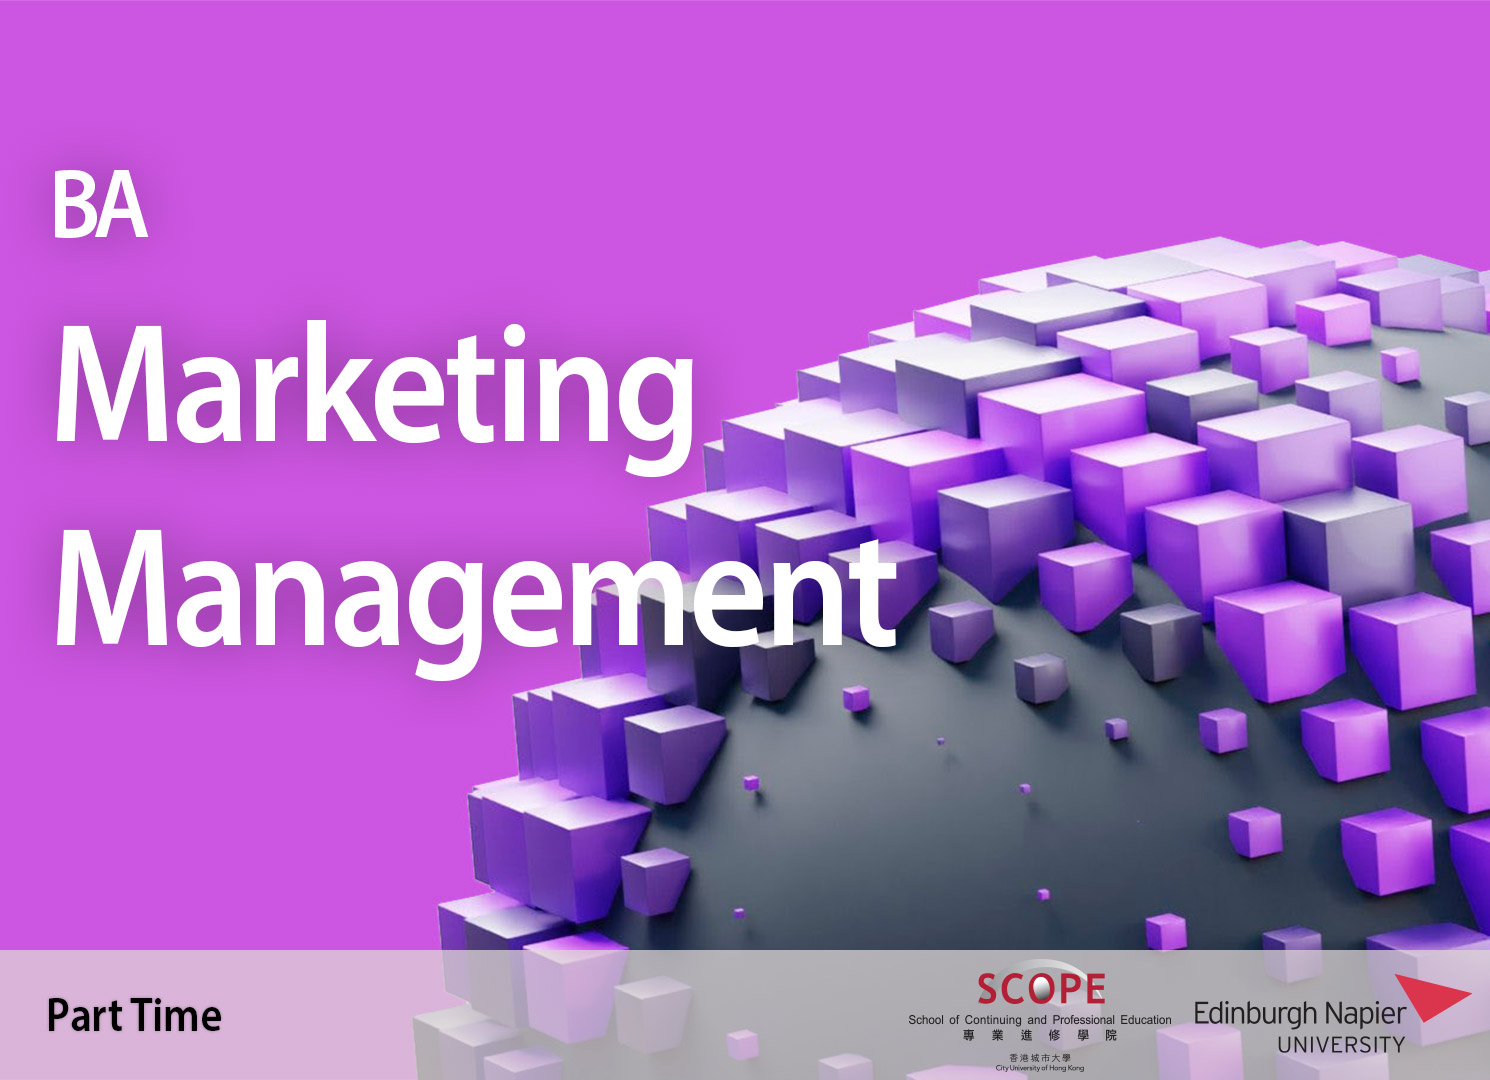 BA Marketing Management